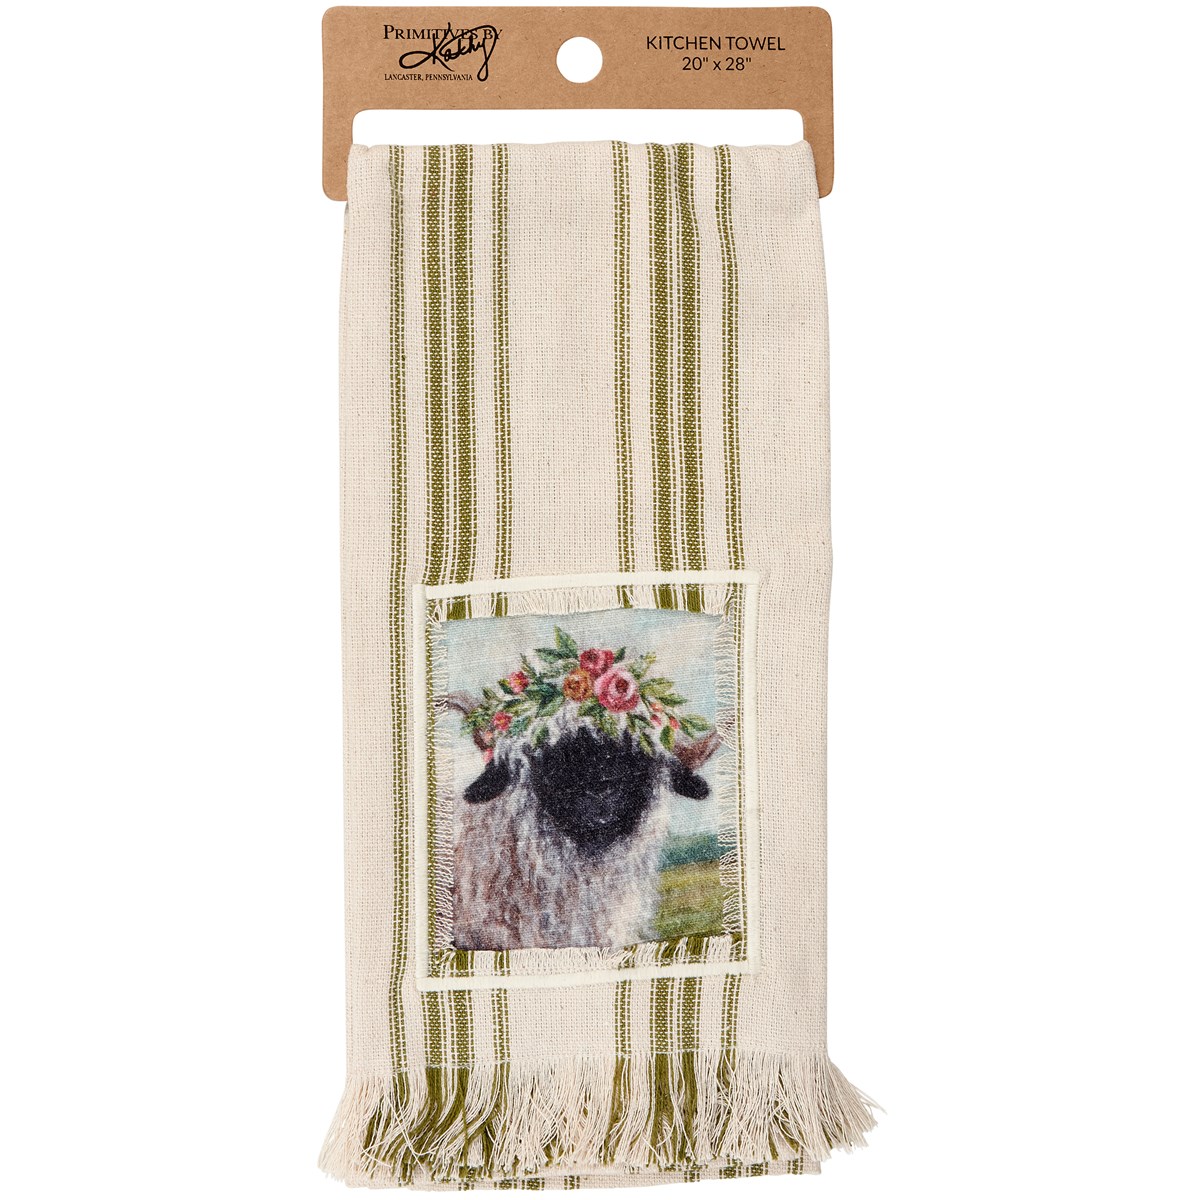 Floral Crown Sheep Kitchen Towel - Cotton